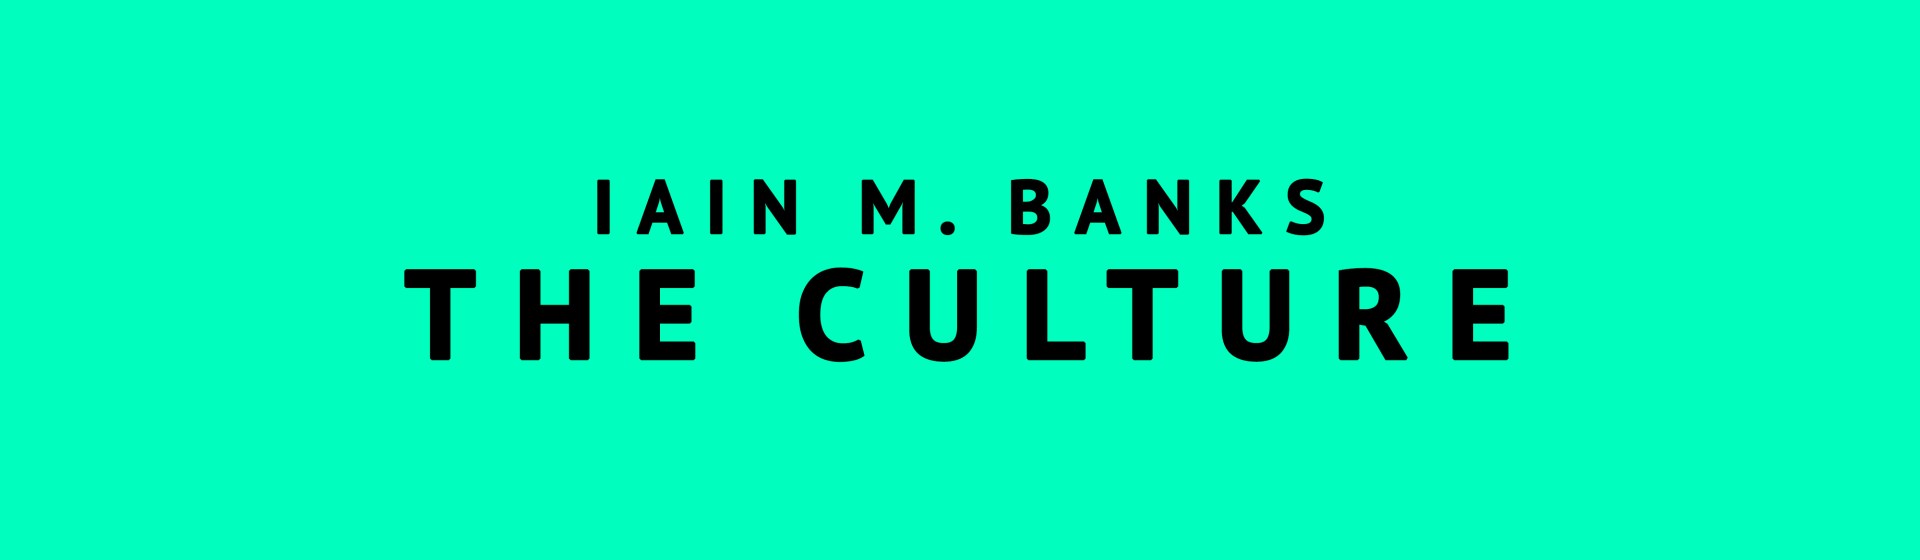 Iain Banks: 'I feel treasured', The Independent